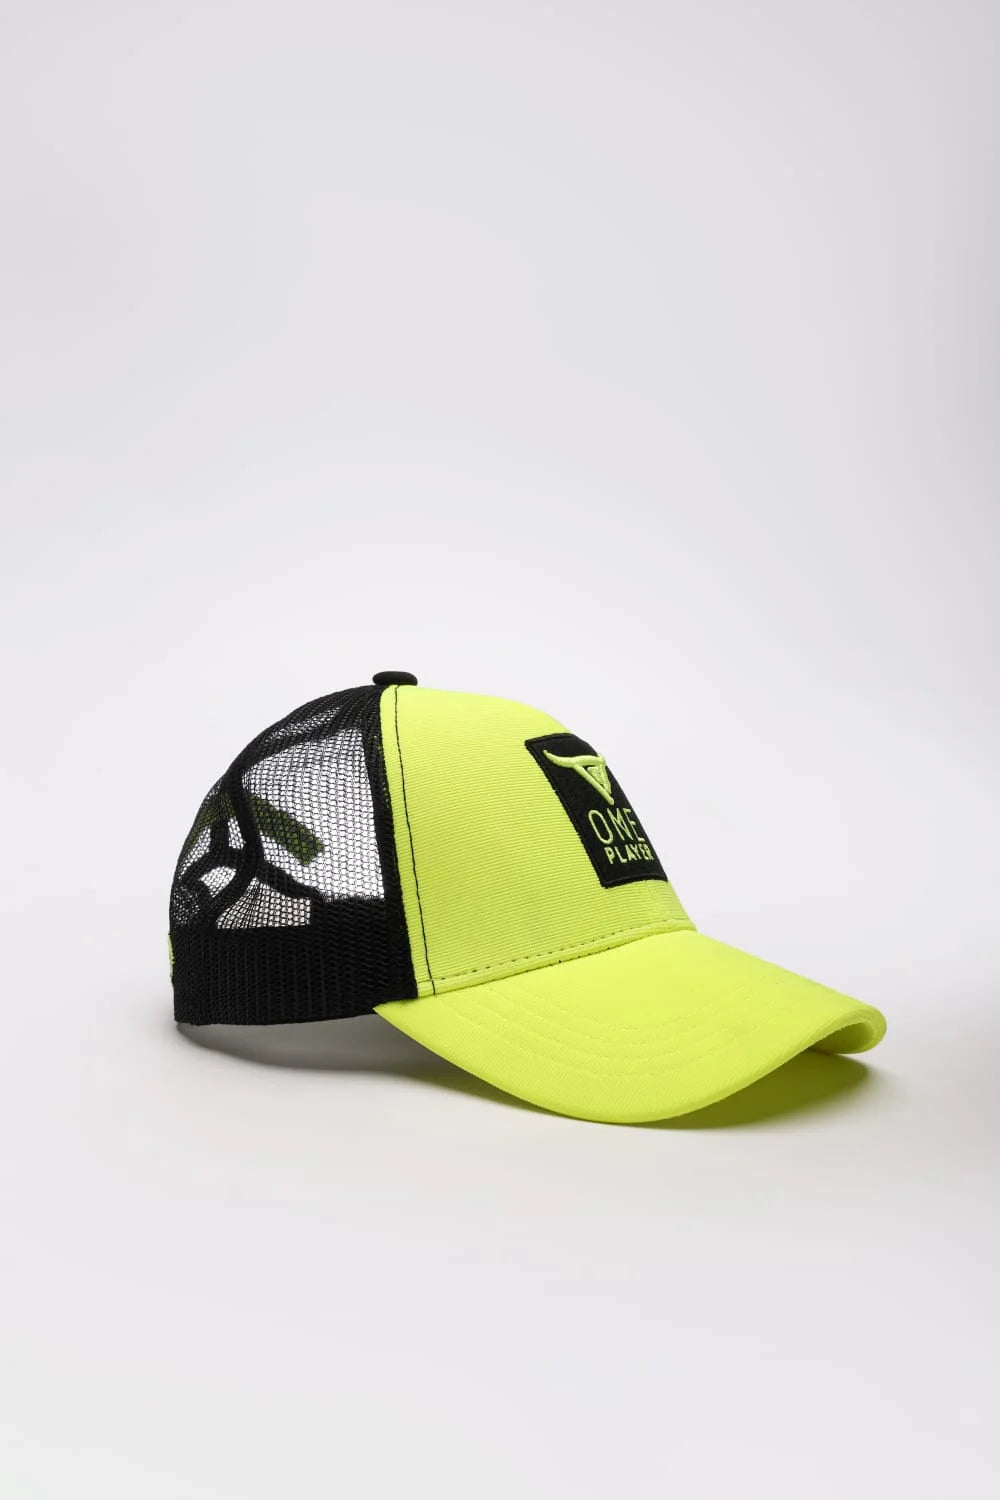 Unisex  Neon & Black Trucker cap, has a visor by One Player